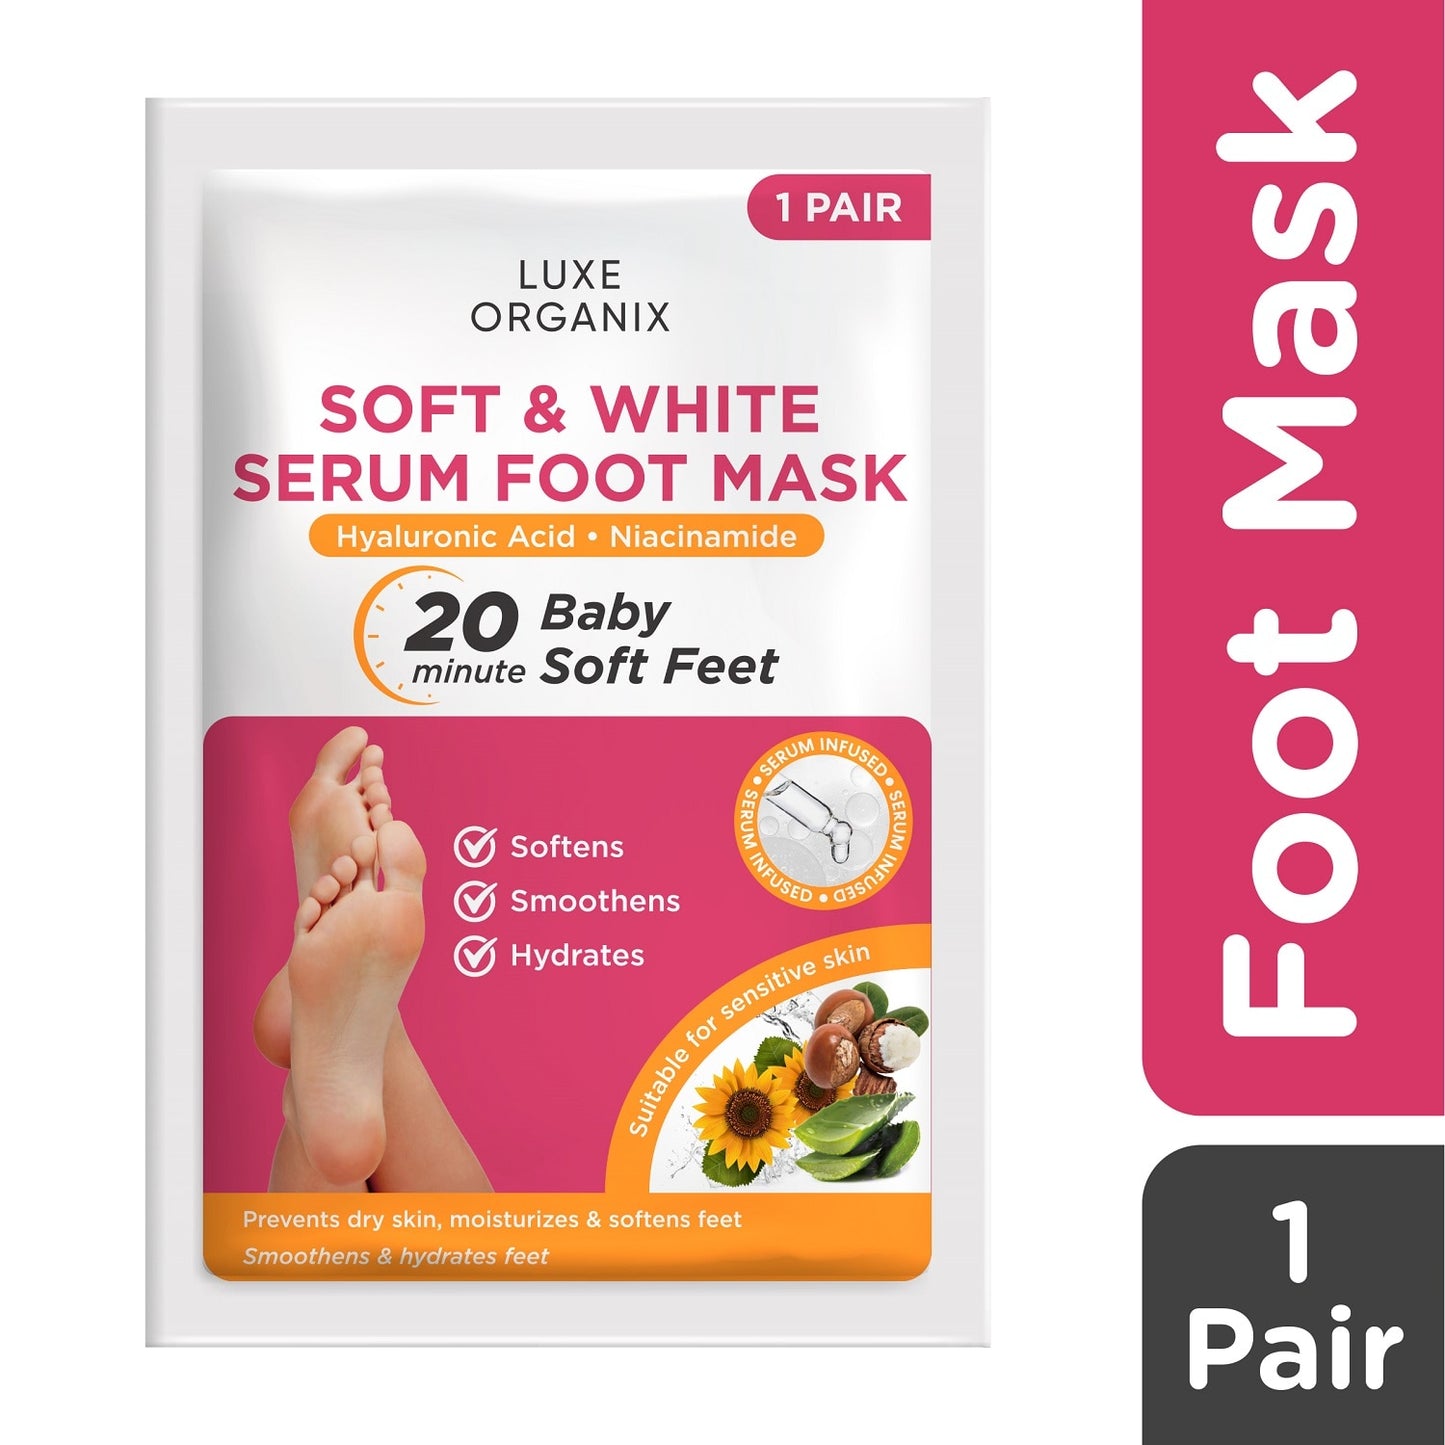 Luxe Organix Soft & White Serum Foot Mask